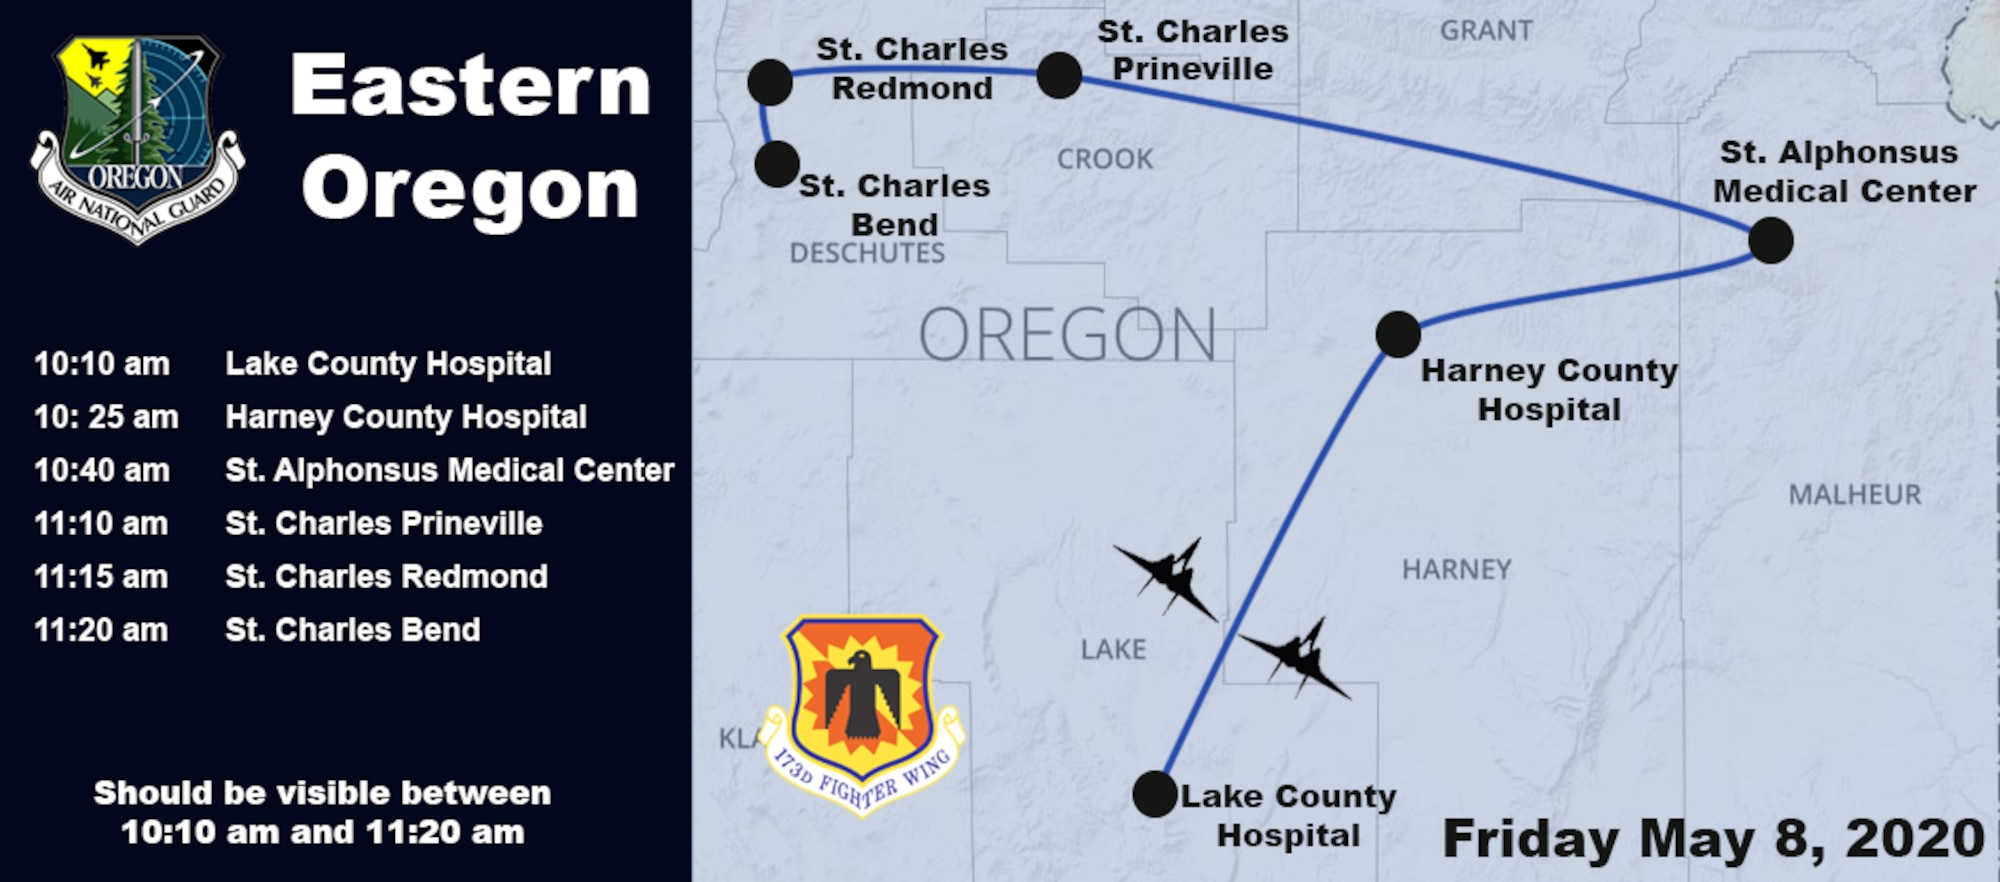 Eastern Oregon flyover plan